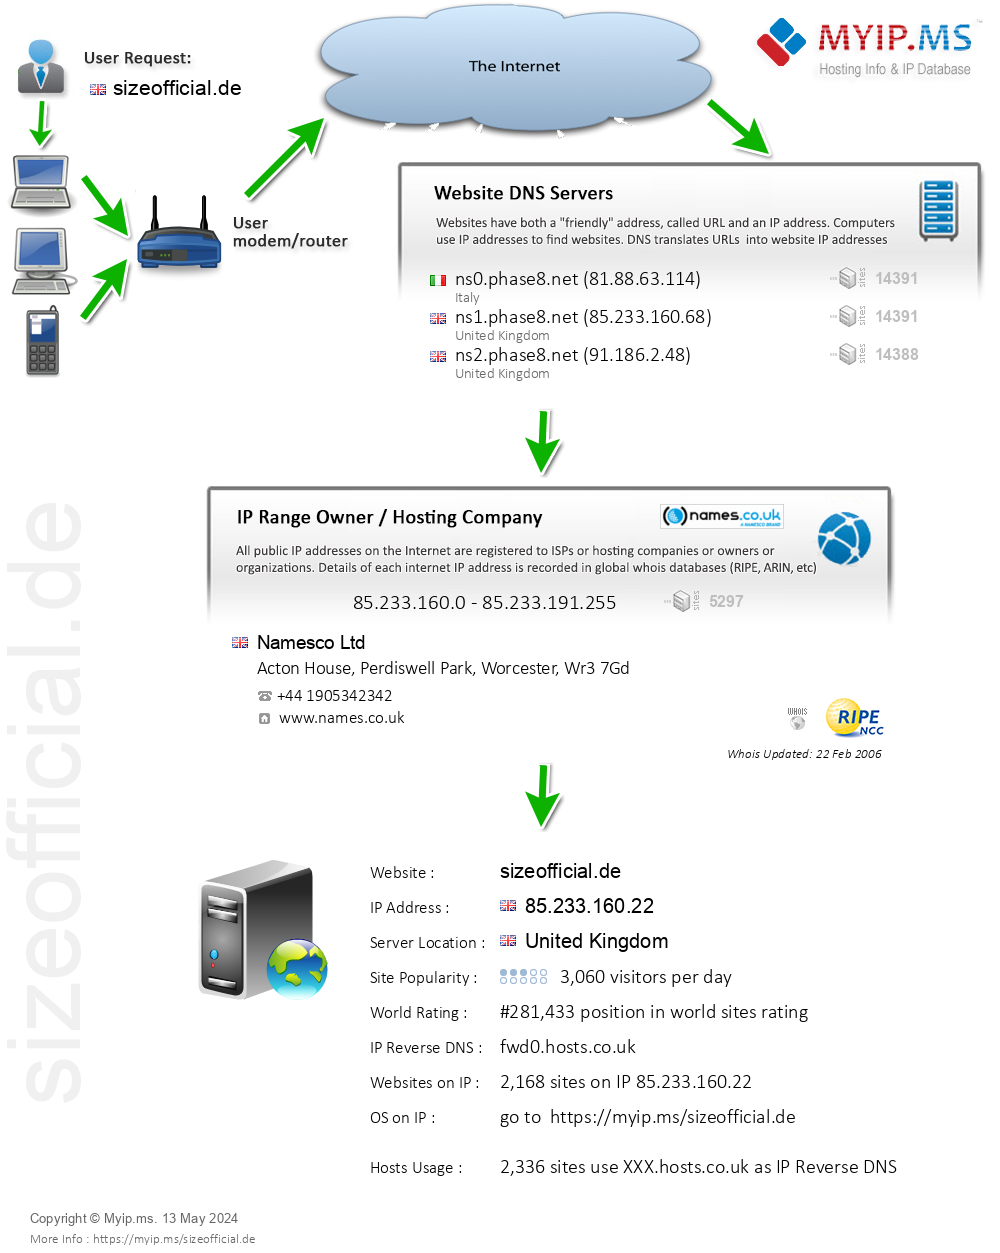 Sizeofficial.de - Website Hosting Visual IP Diagram